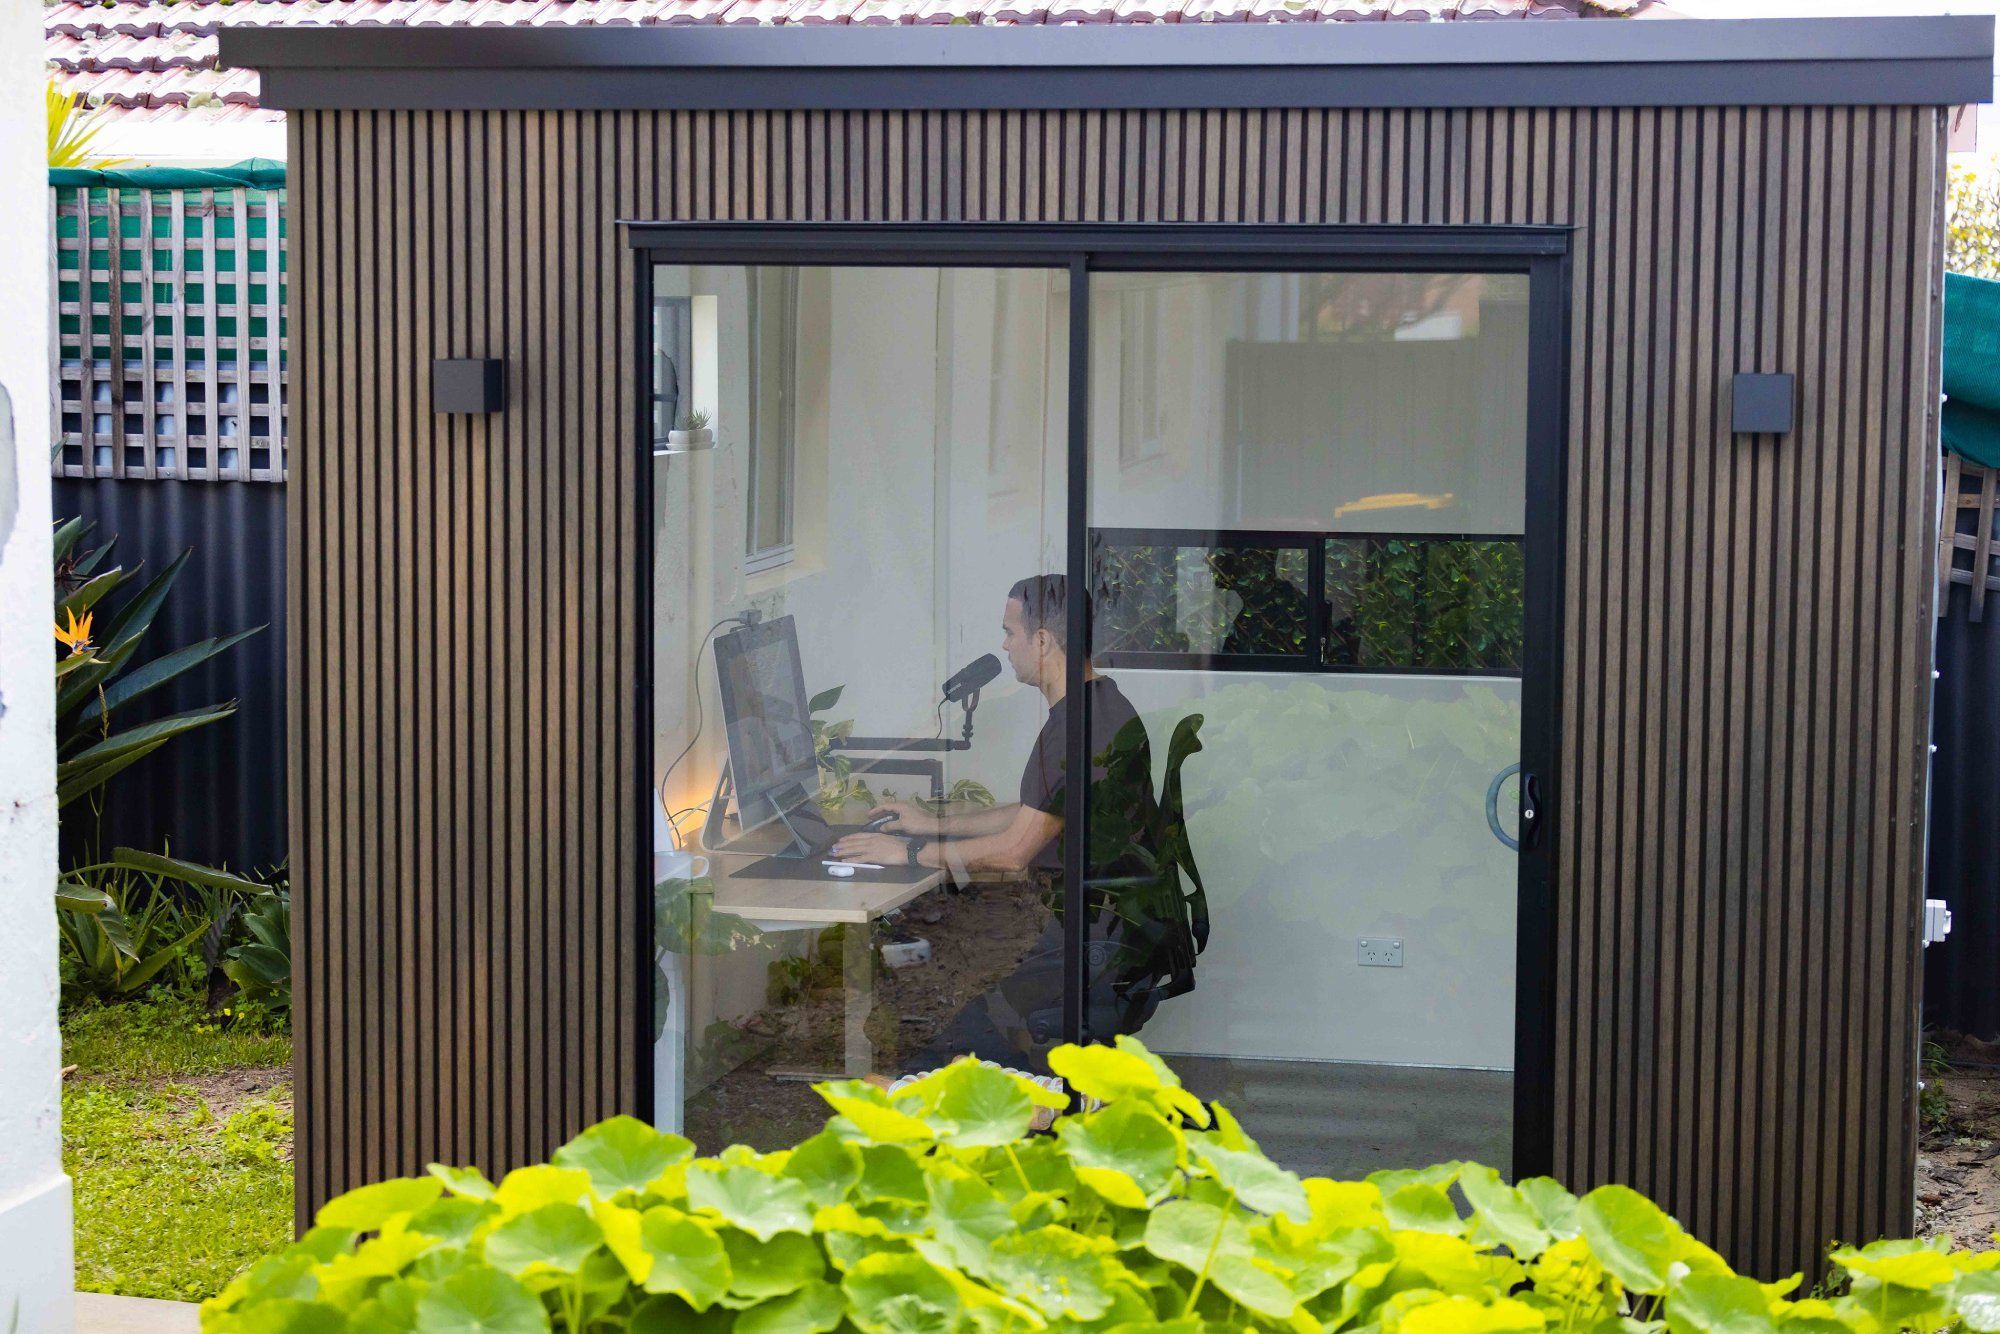 Petar Ceklic, a freelance designer from Australia, working from his garden office pod